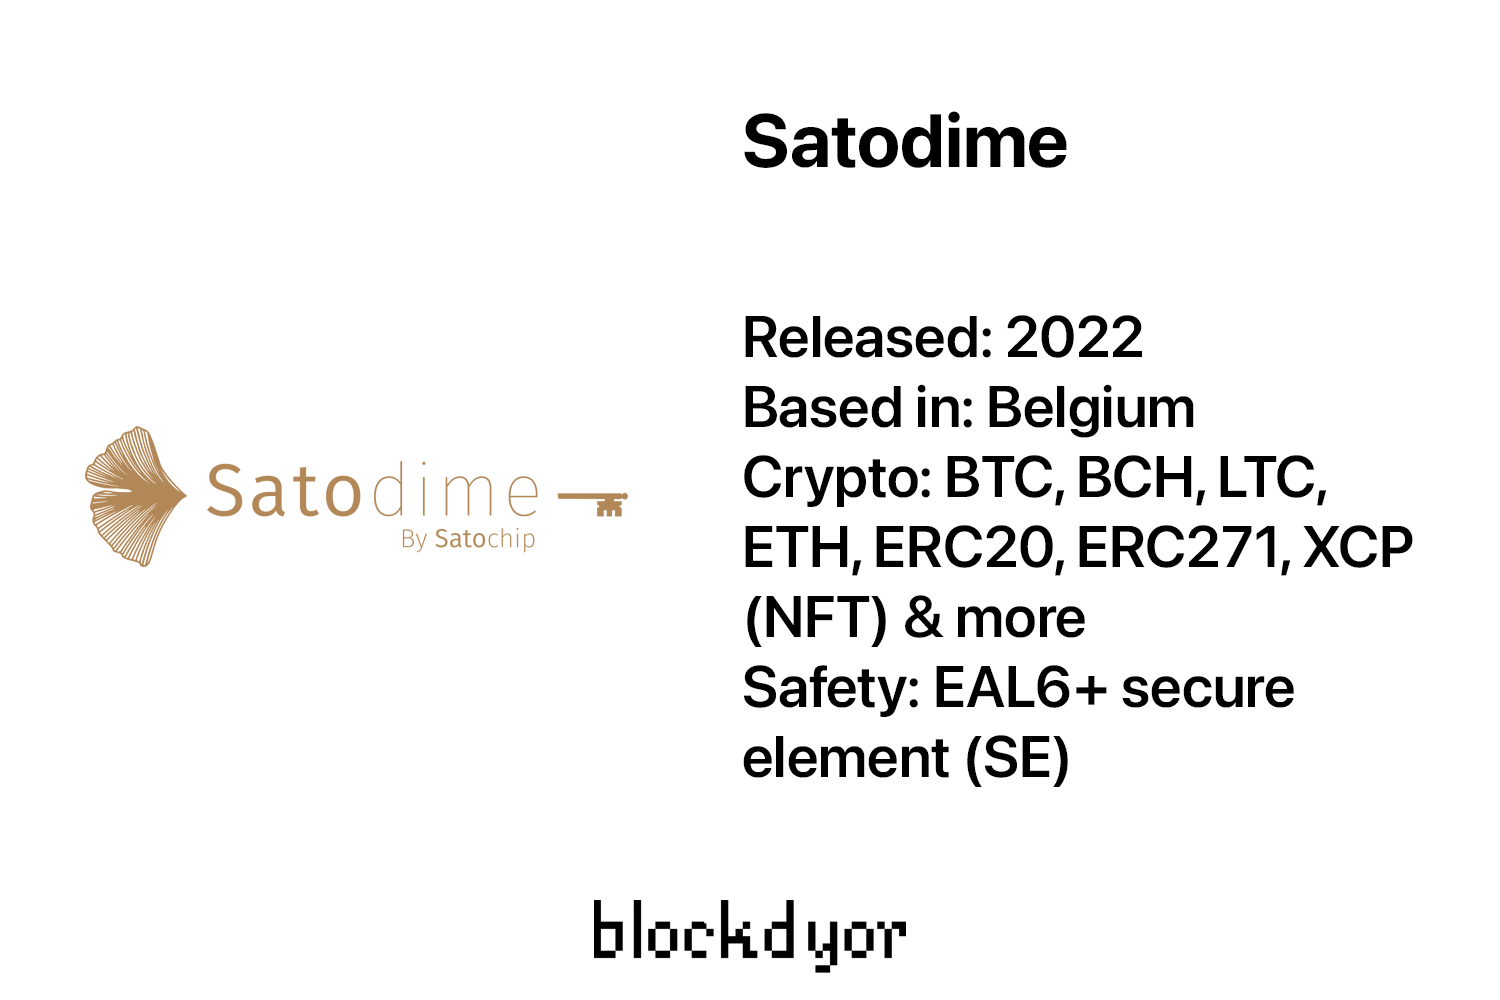 Satodime Overview